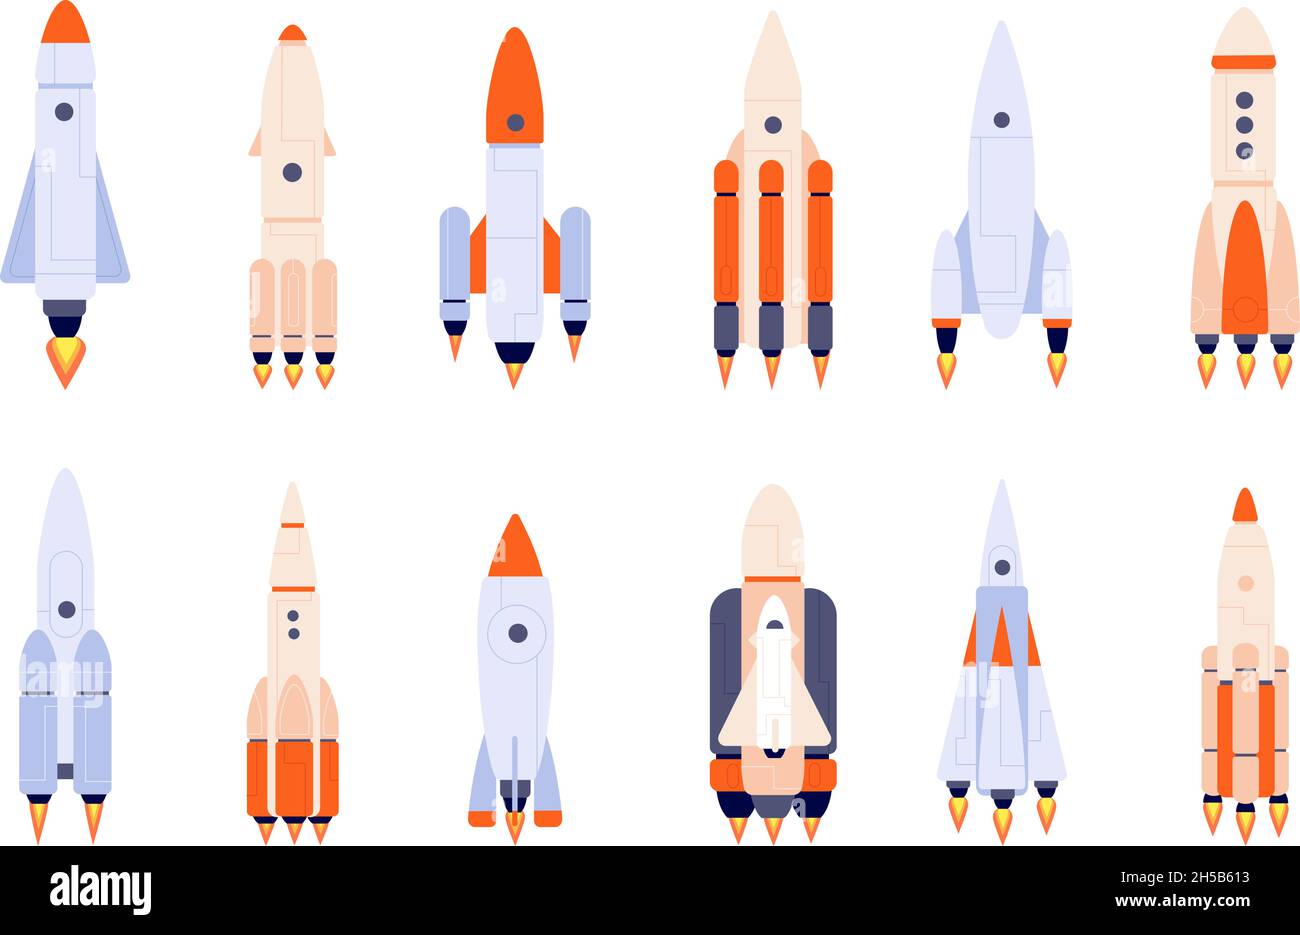 Flat rocket. Space rockets, spaceship start up or idea launch. Isolated shuttle on start, cartoon business development metaphor utter vector icons Stock Vector